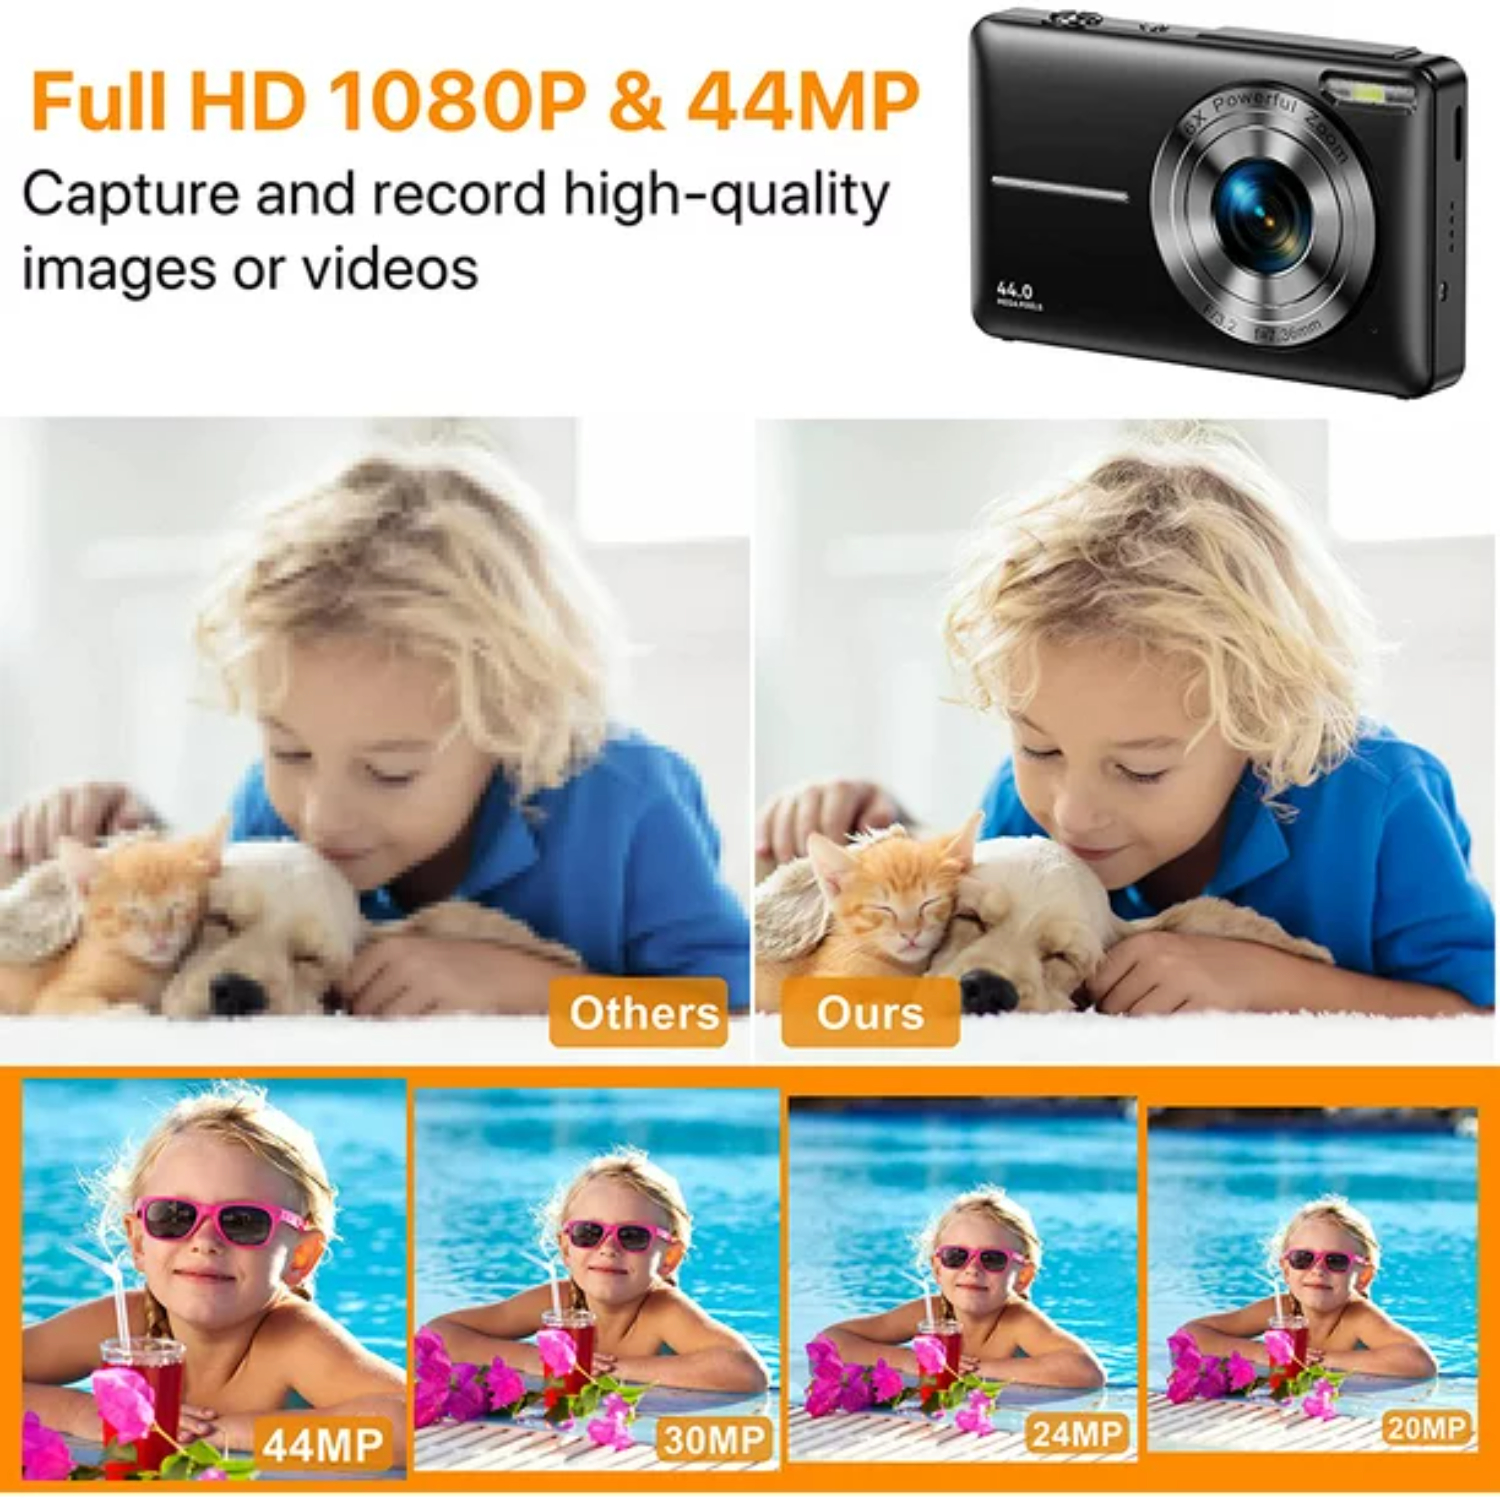 Melcam 01DC403 44.0 MP 1080P Digital Camera 16X Digital Zoom Compact Point and Shoot Camera, Black - image 3 of 4